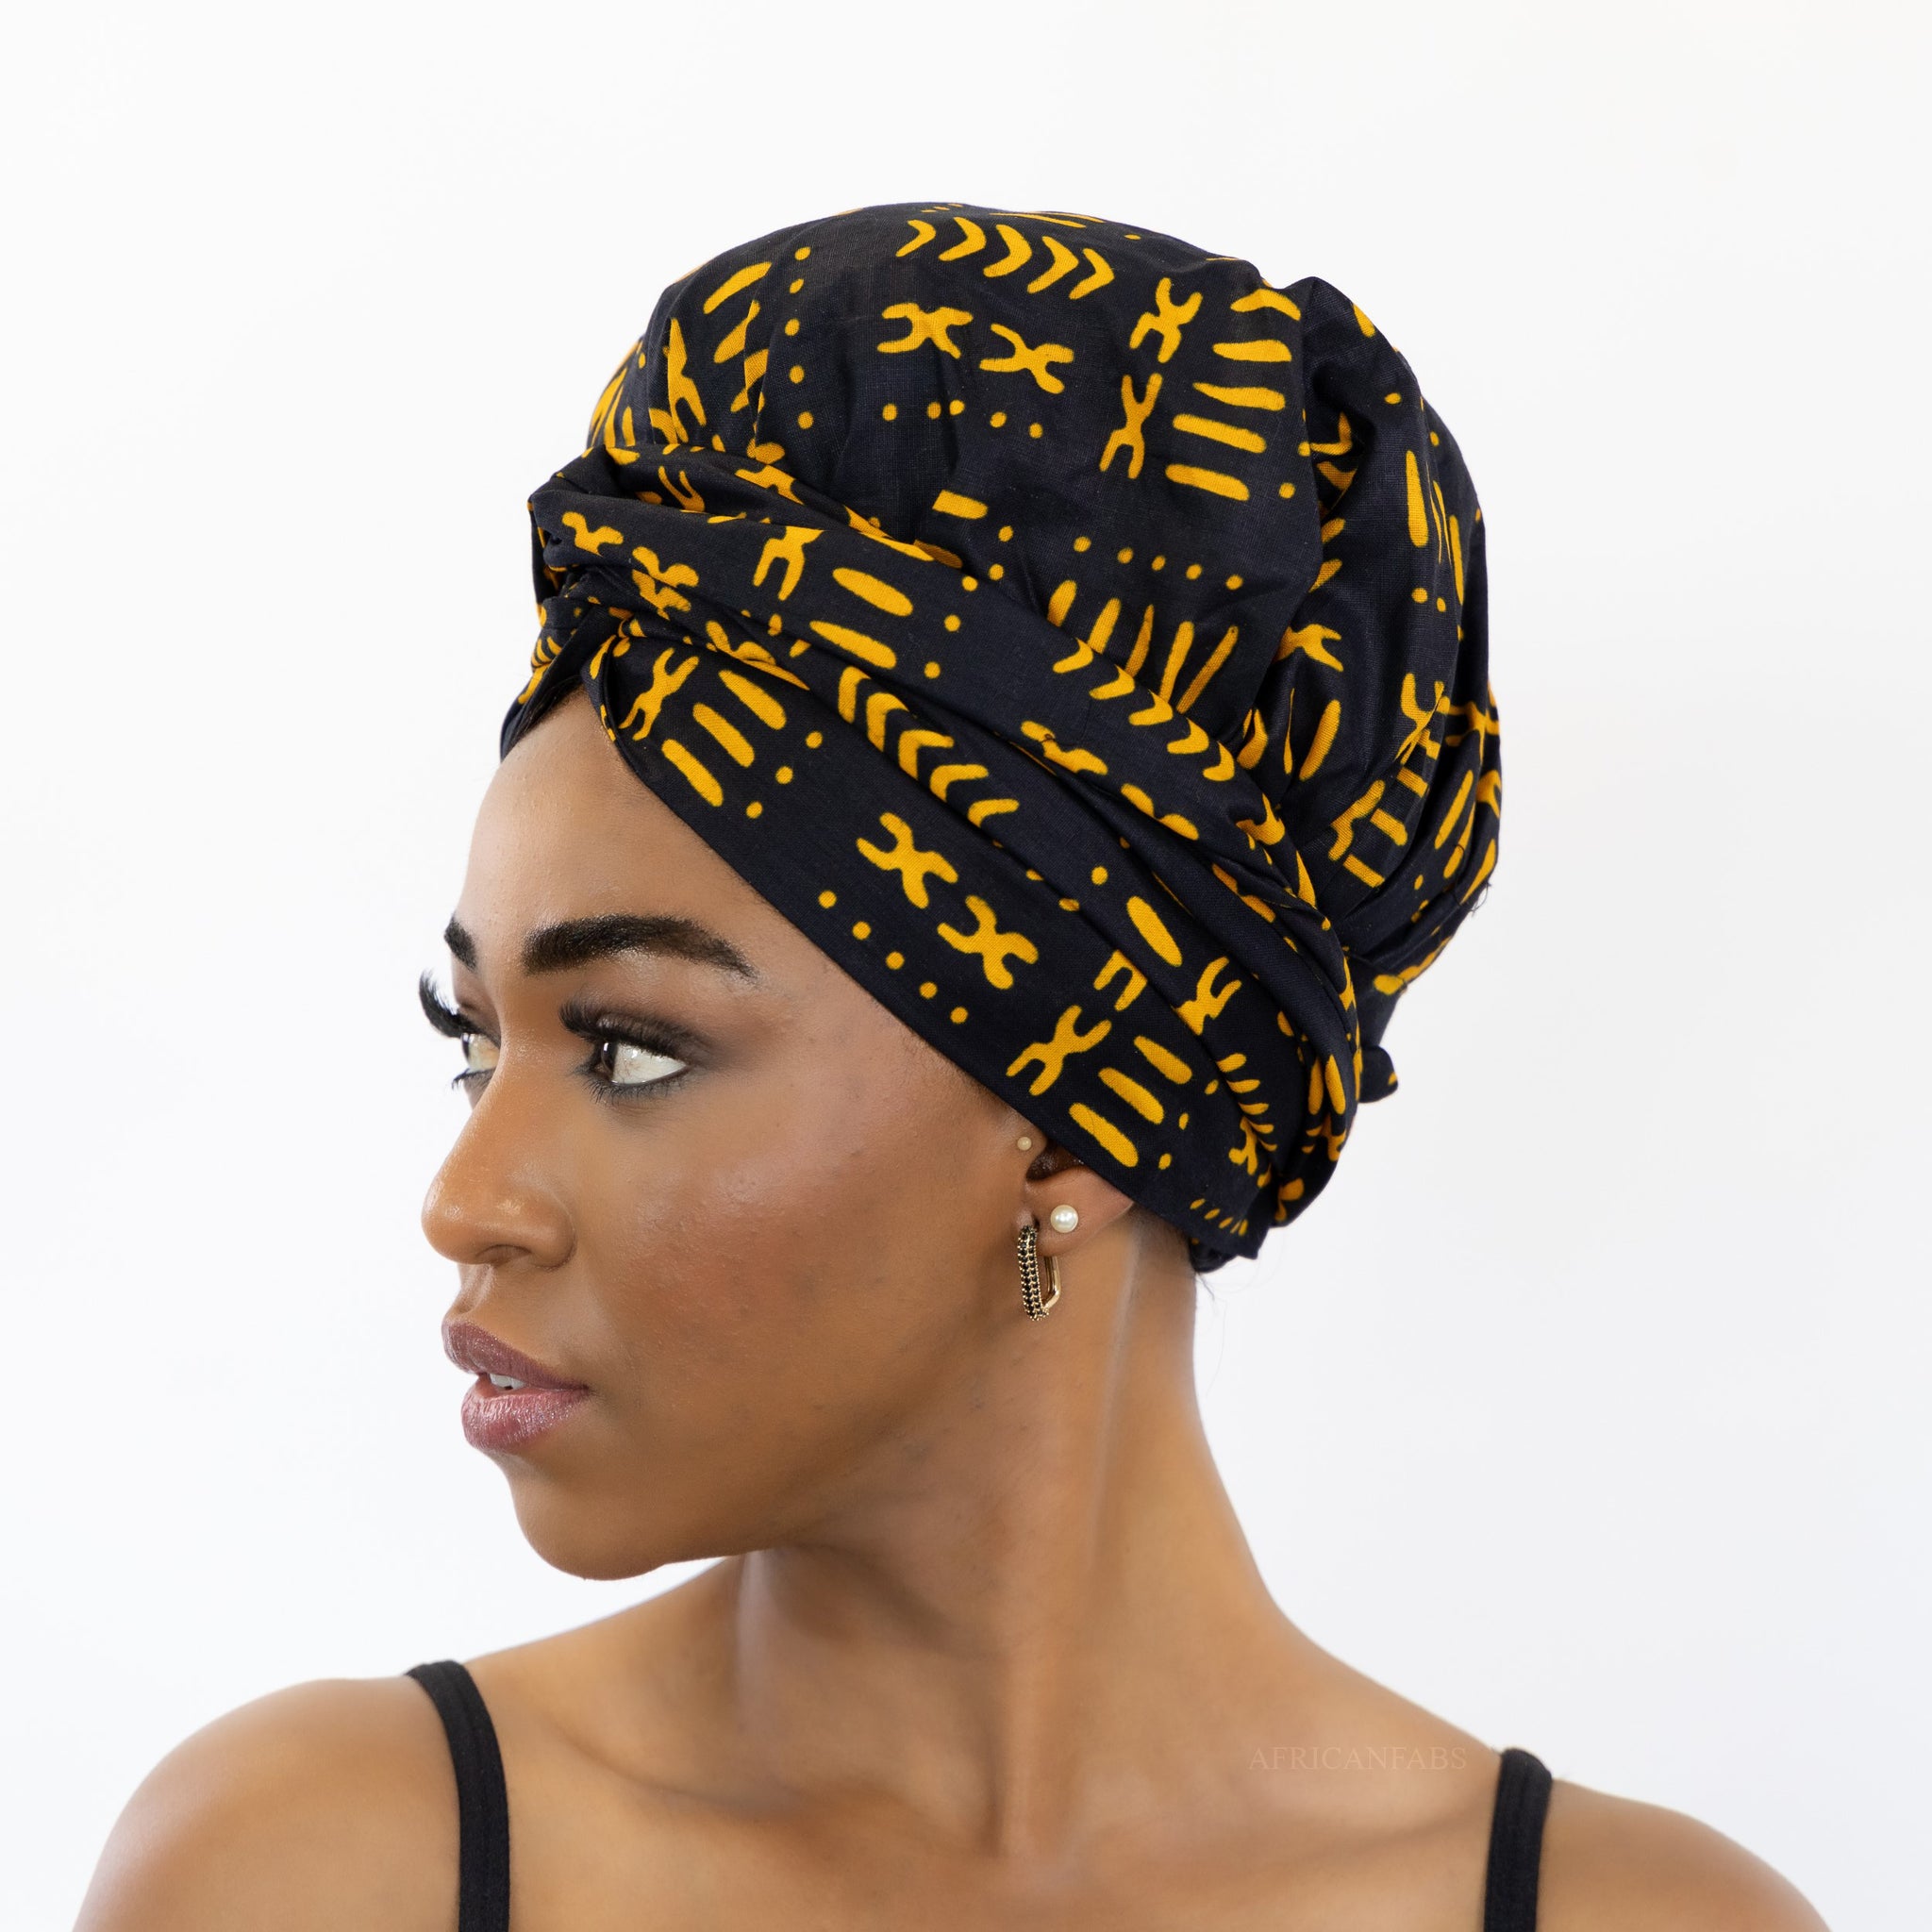 Easy headwrap - Satin lined hair bonnet - Black / yellow Bogolan